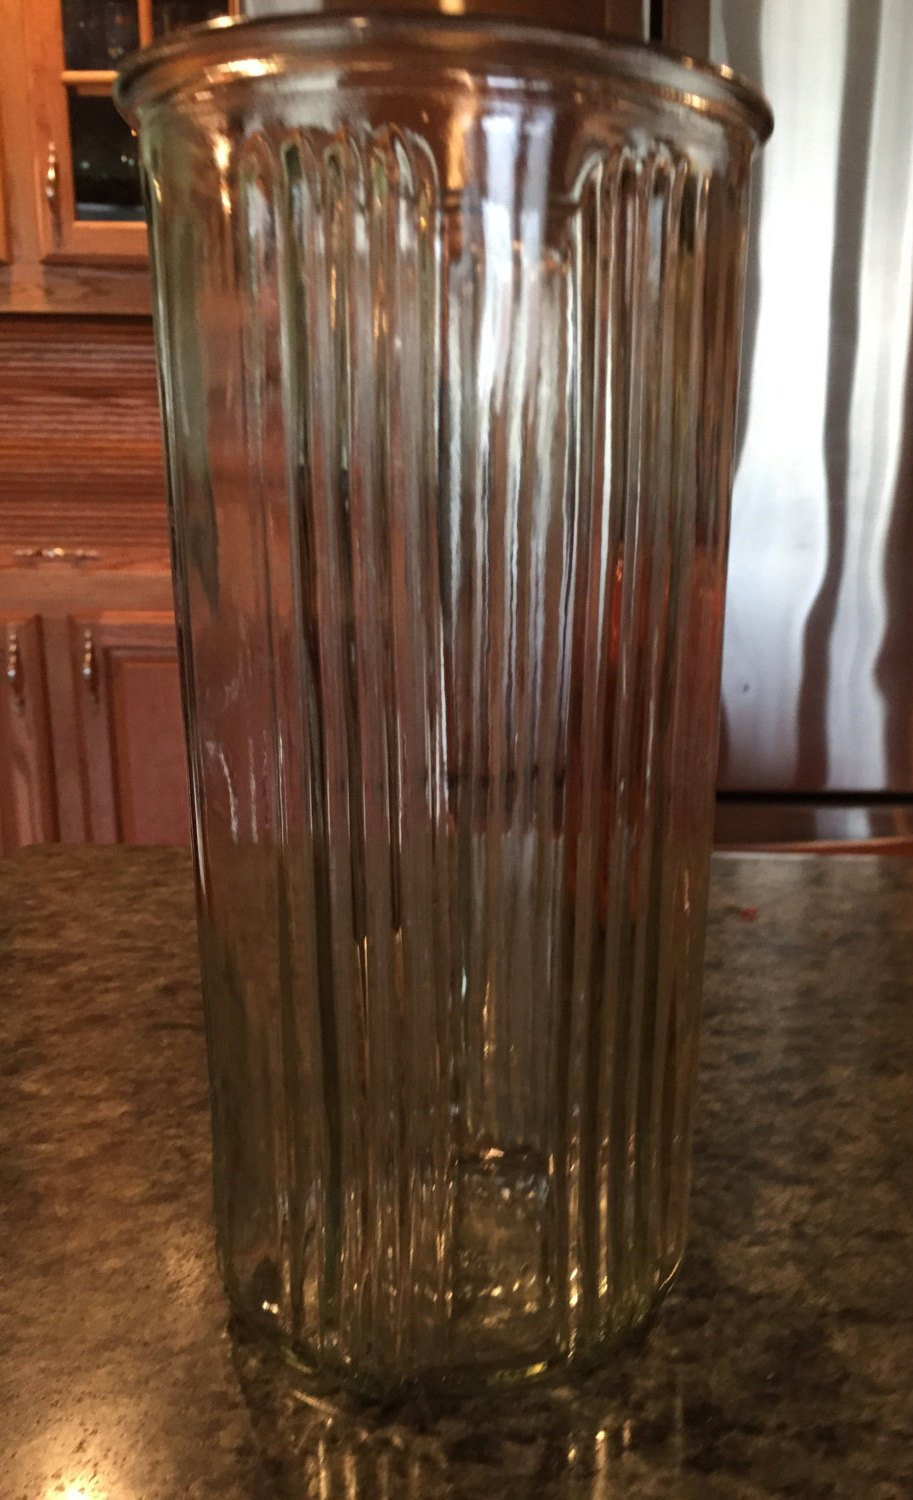 13 Lovable Hoosier Glass Vase 4094 2024 free download hoosier glass vase 4094 of vintage hoosier glass vase 4080 c etsy inside dc29fc294c28ezoom